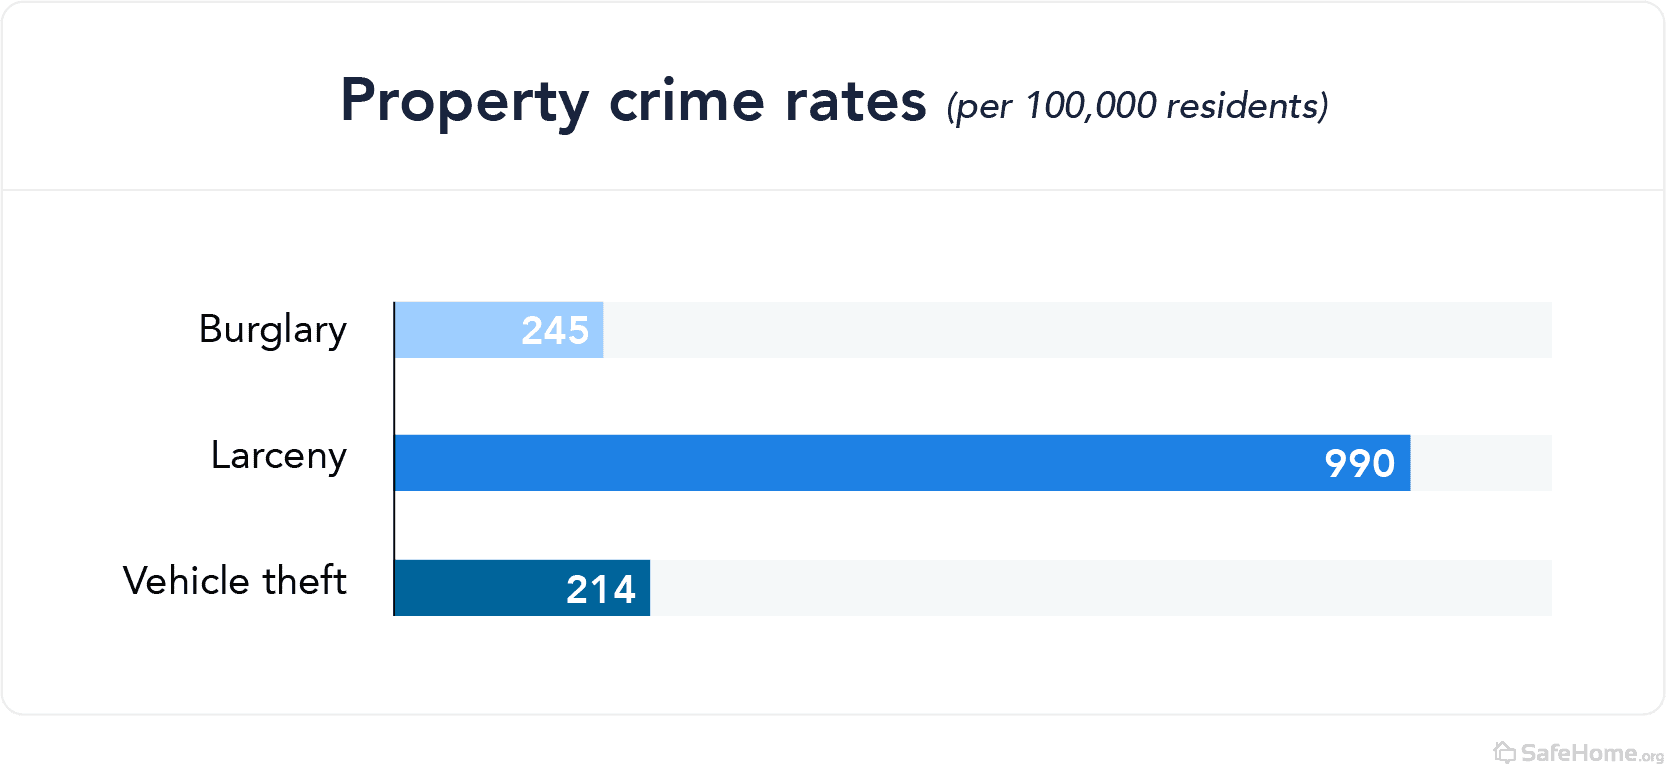 Kentucky property crime rates